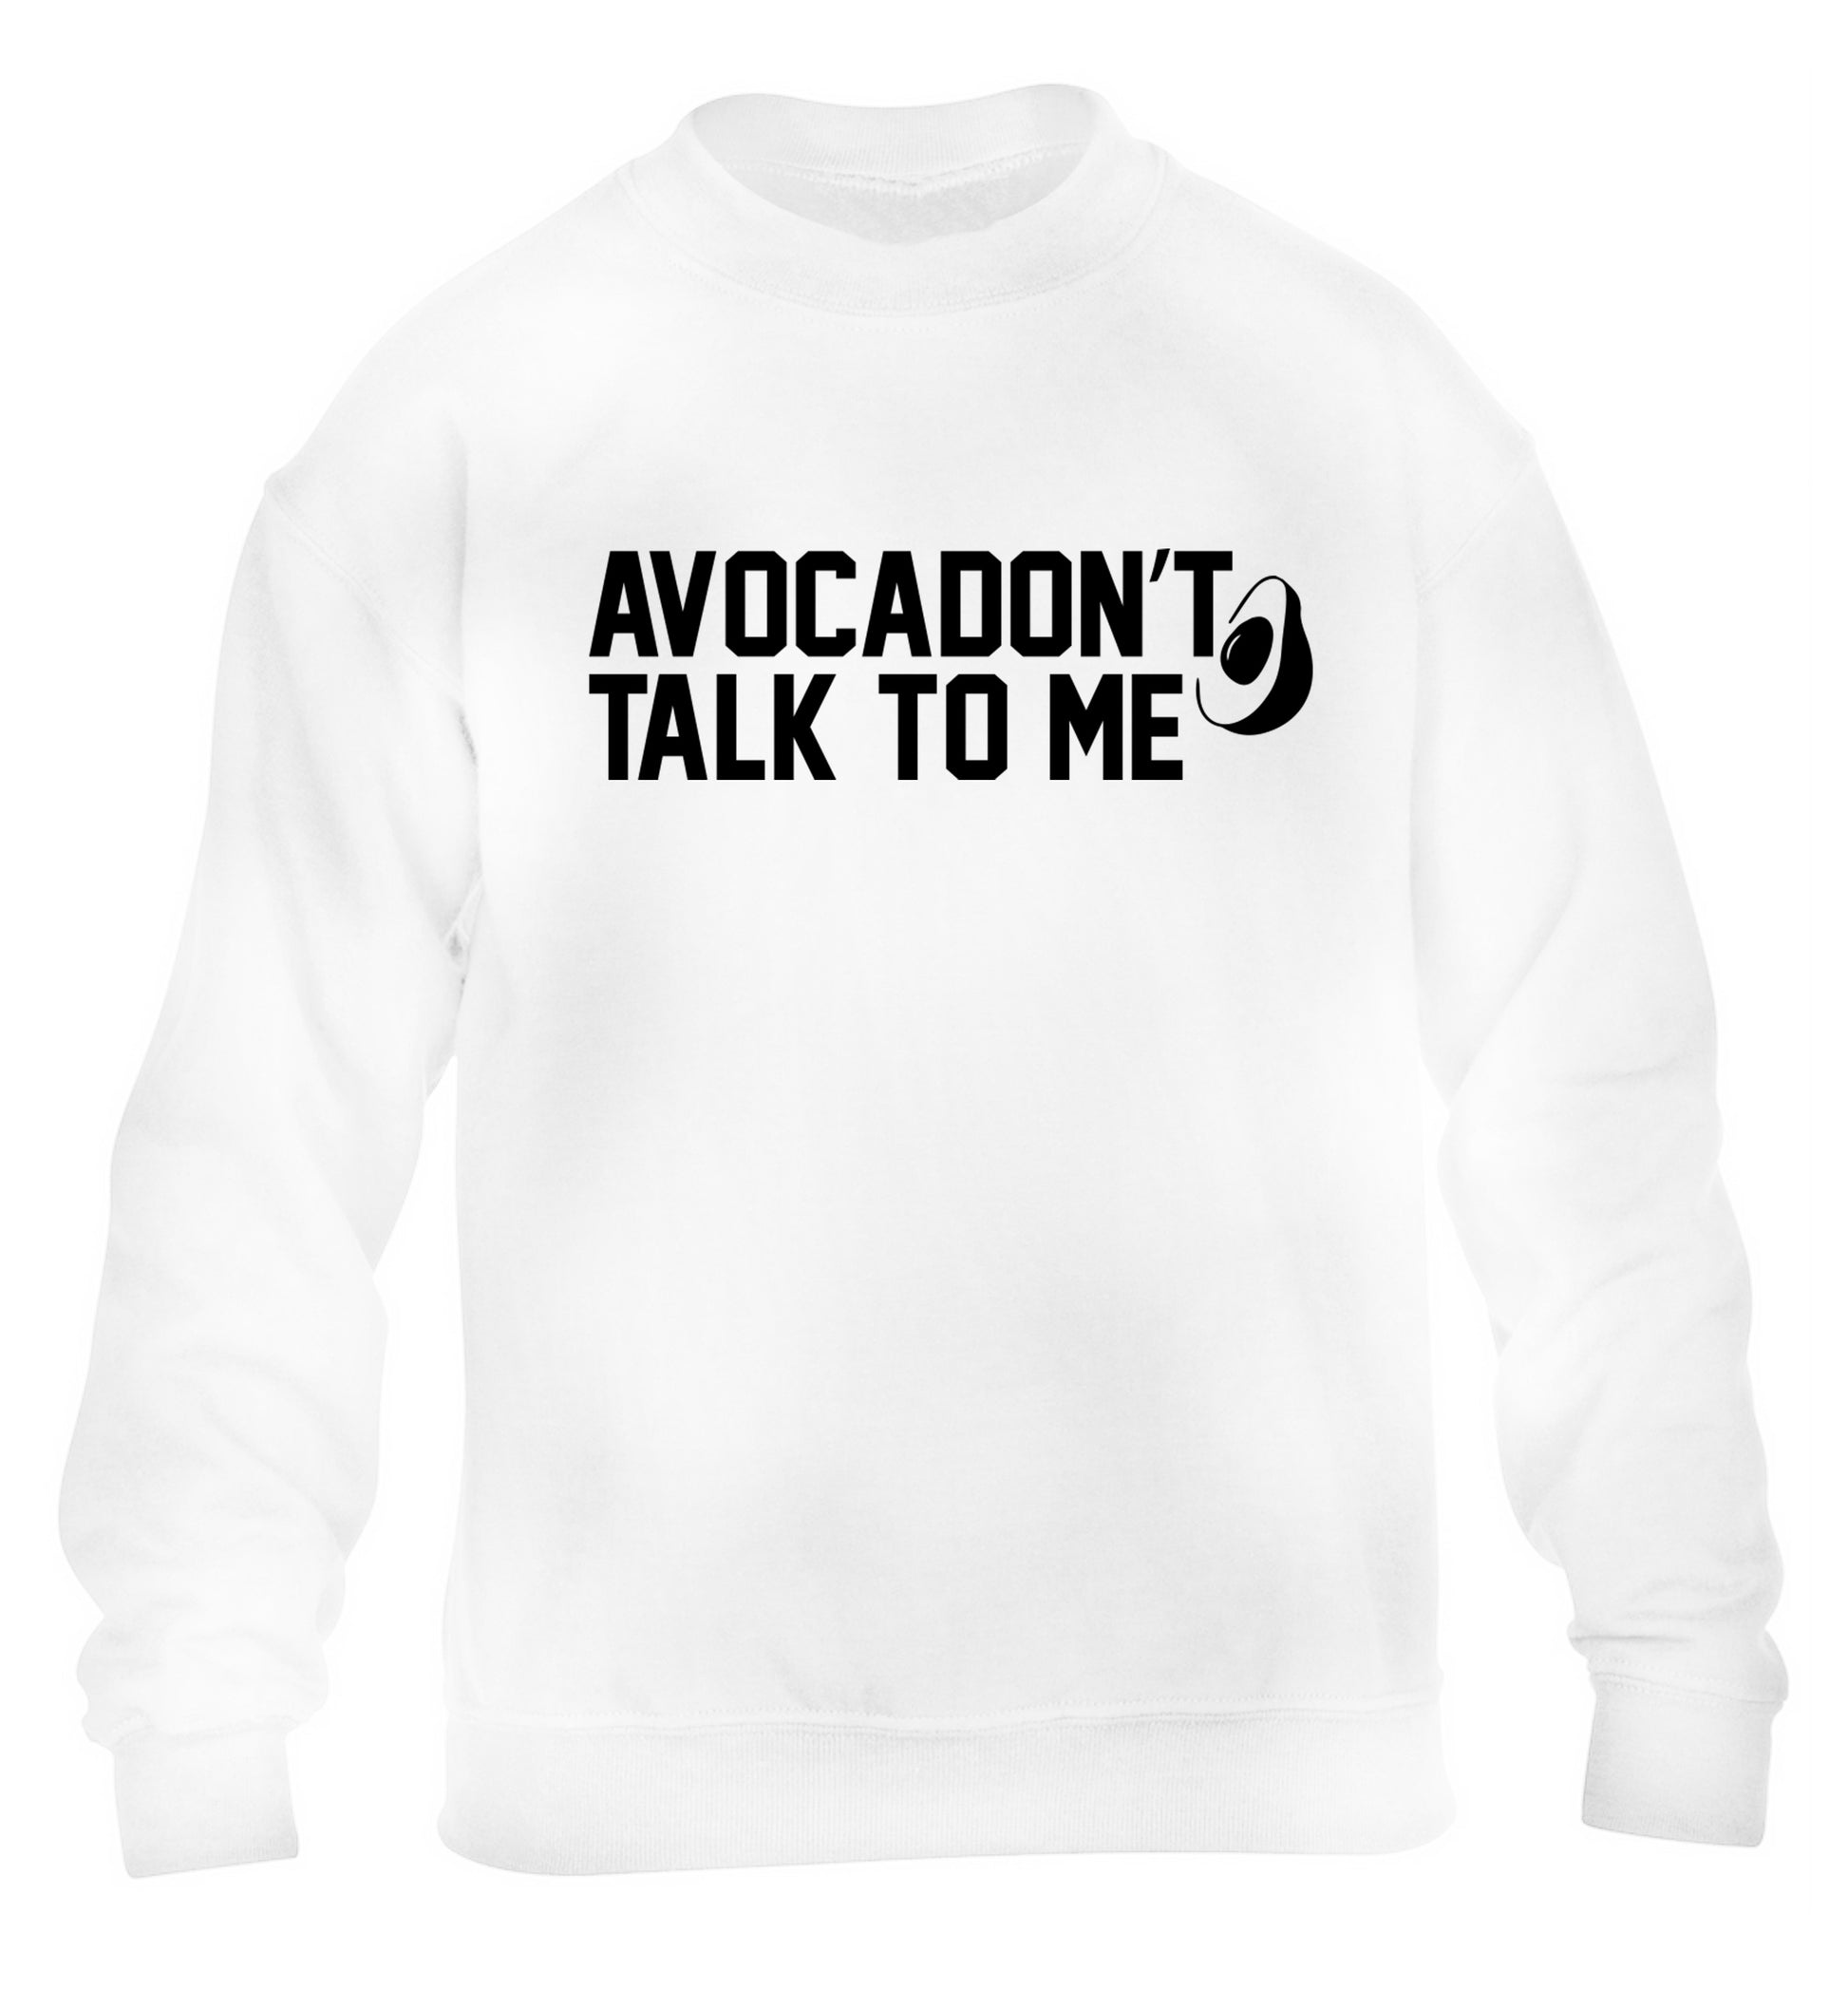 Avocadon't talk to me children's white sweater 12-14 Years